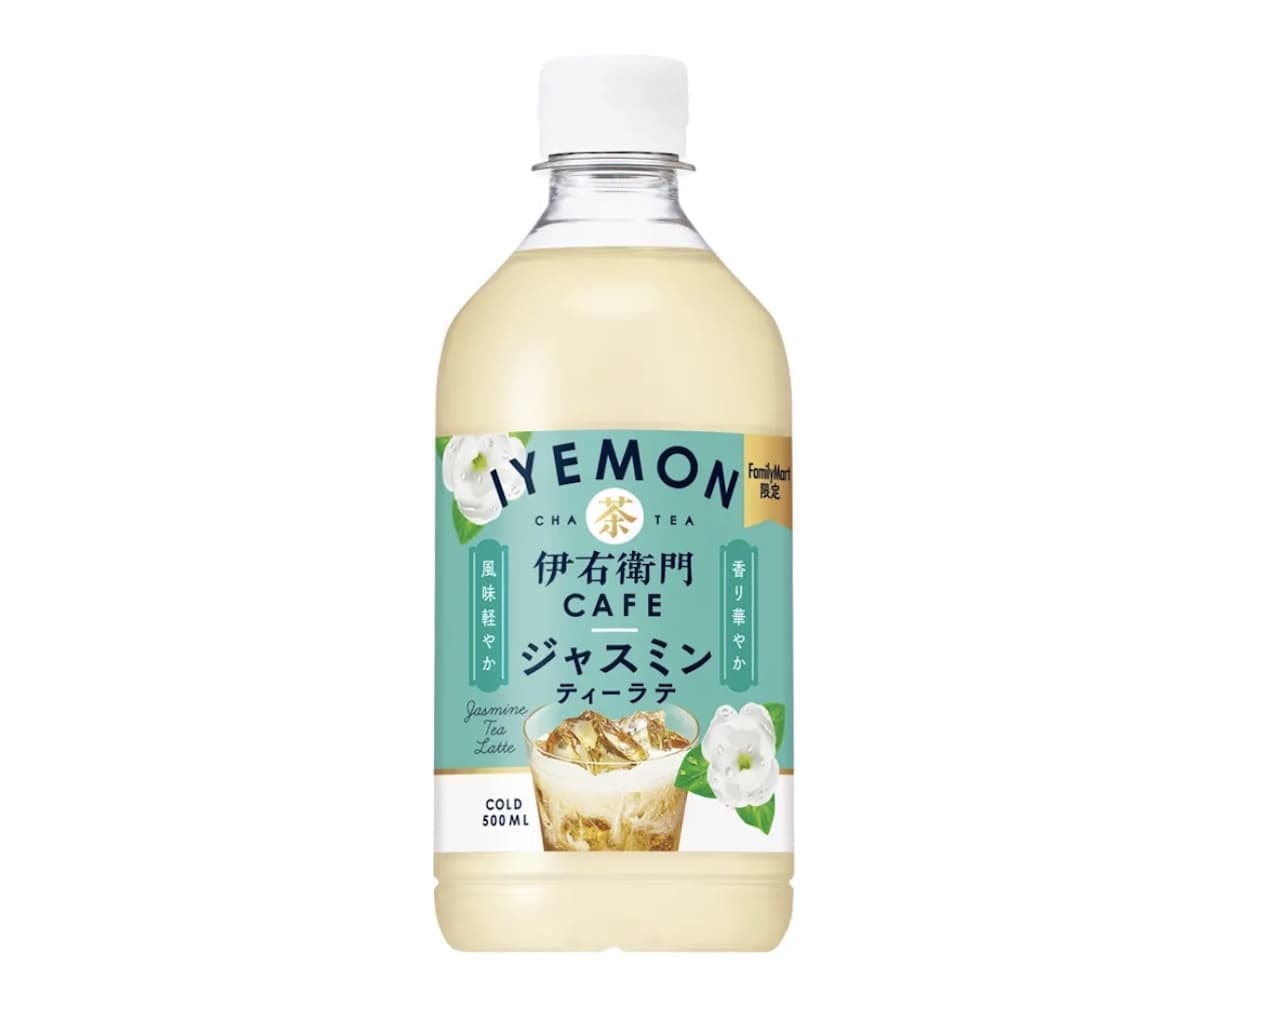 Famima's limited "Iyemon Cafe Jasmine Tea Latte".